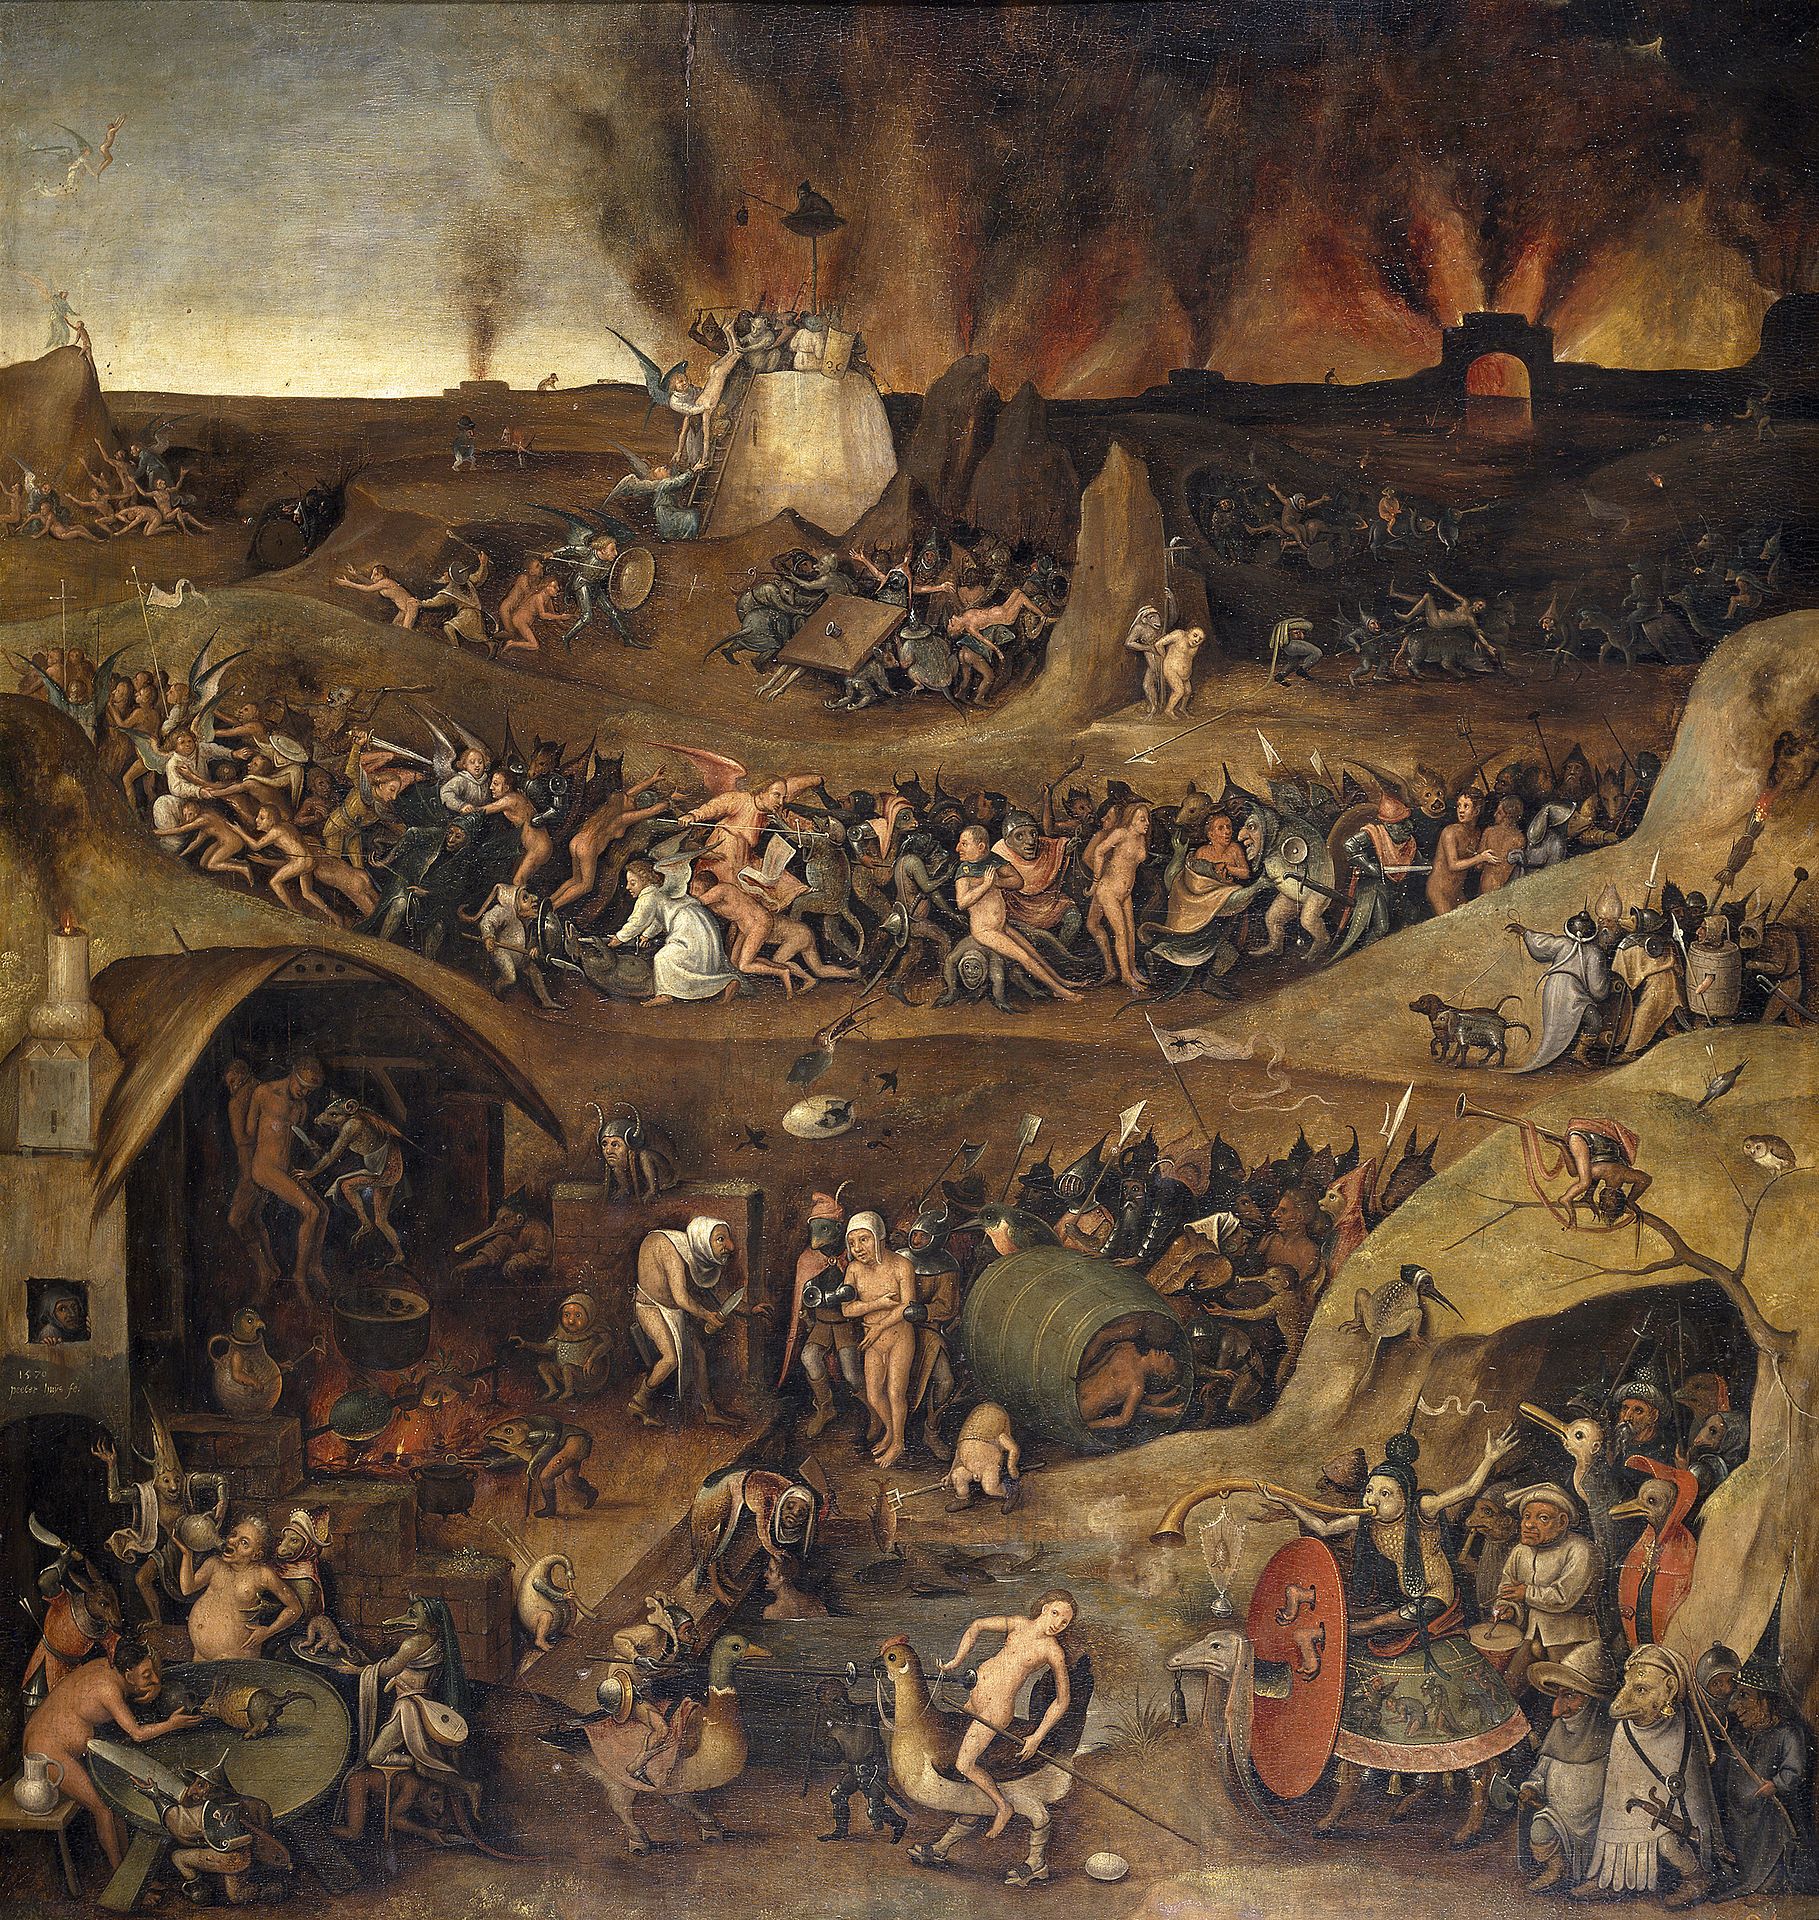 Pieter Huys, The Inferno, 1570